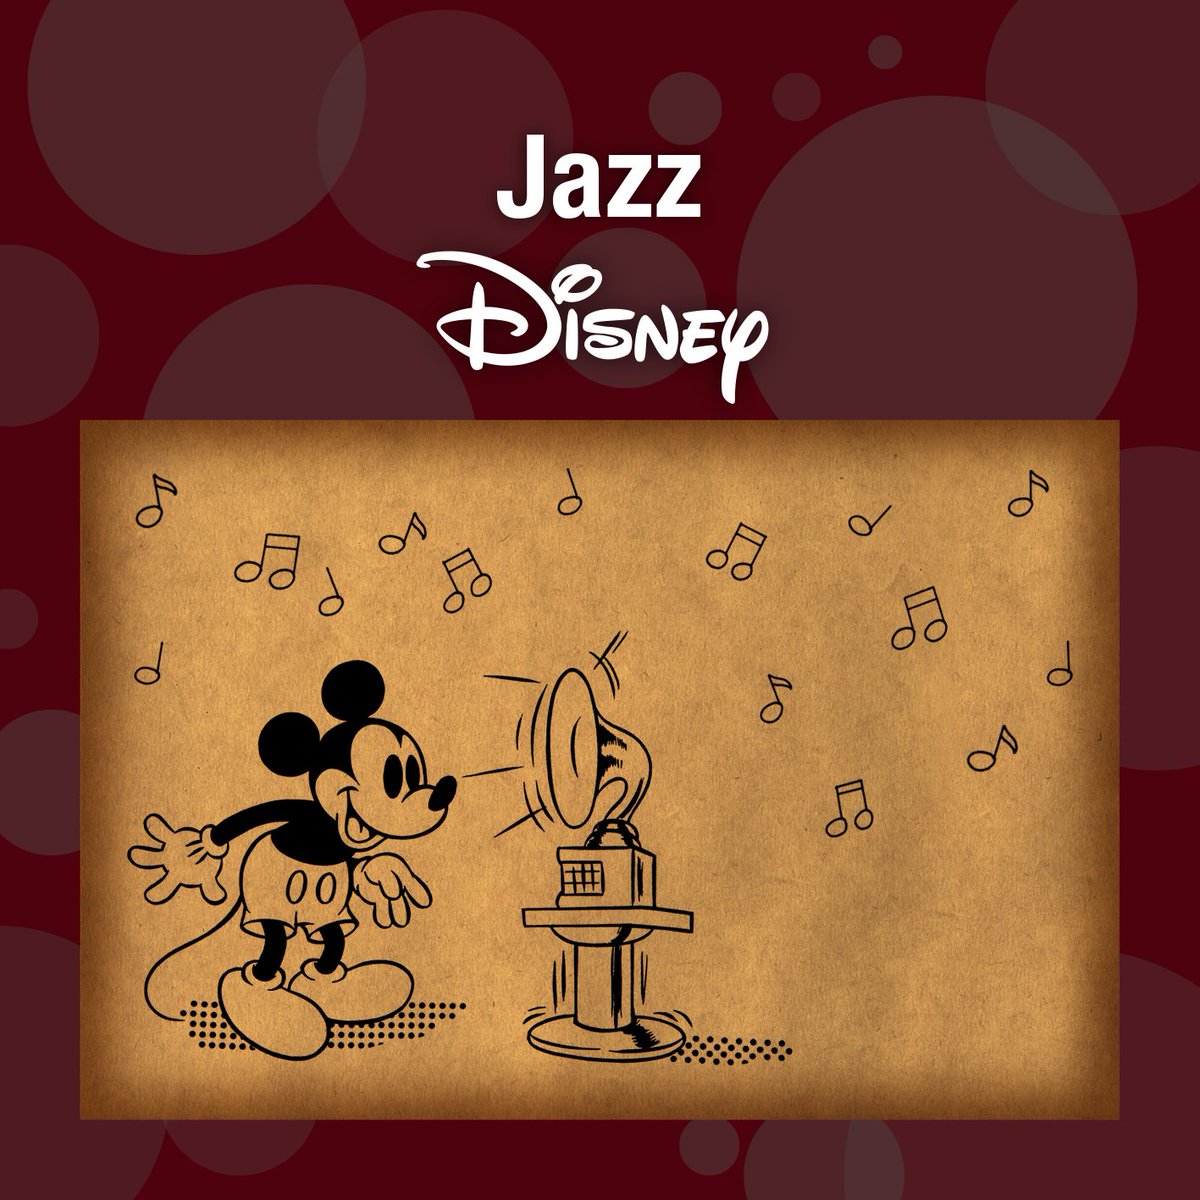 Uzivatel Spotify Japan Na Twitteru ディズニー公式アカウント Disneymusicjp から新しいプレイリスト Jazz Disney が公開 最新アルバム Jazz Loves Disney 2 の楽曲など様々なジャズ ミュージシャンに愛されカバーされたディズニー音楽をフォローして